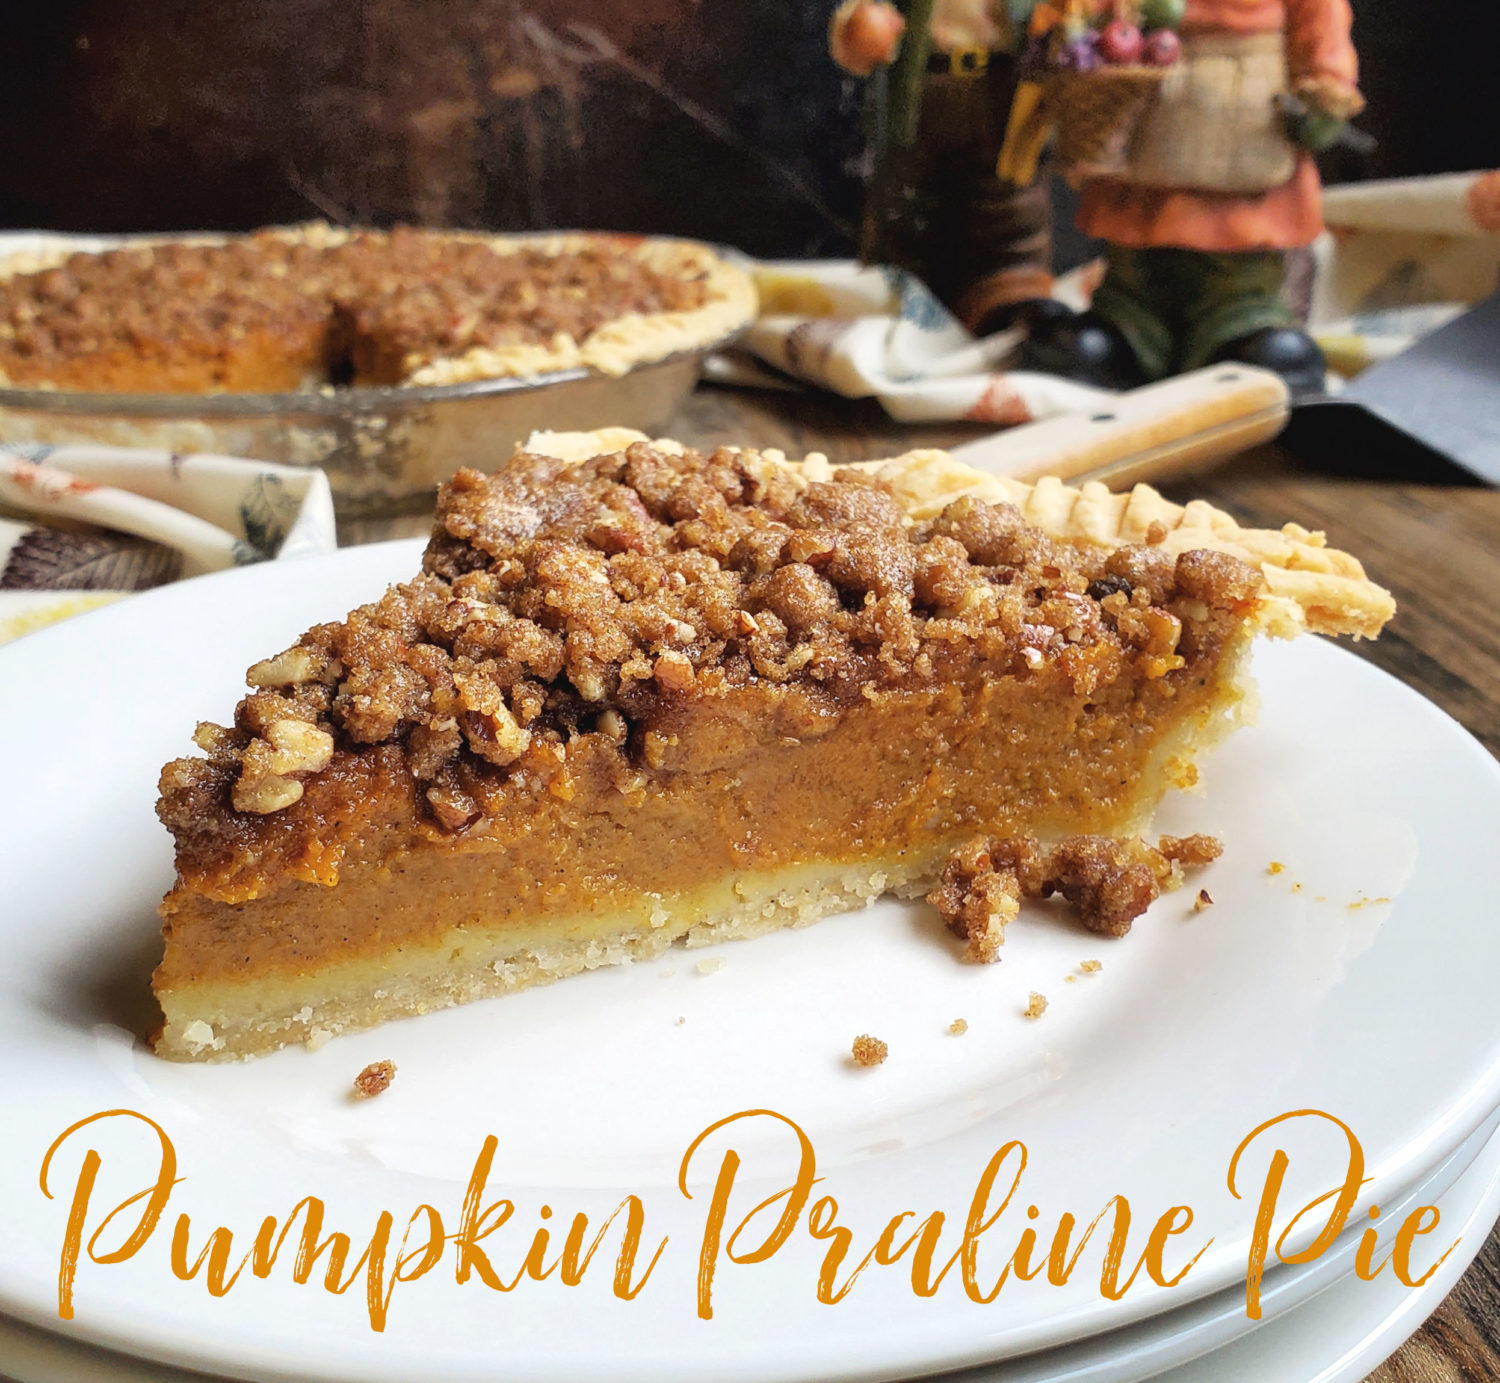 Pumpkin Praline Pie; a spiced pumpkin pie baked with a brown sugar-pecan praline topping & a dollop of whipped cream. Pumpkin pie game changer.